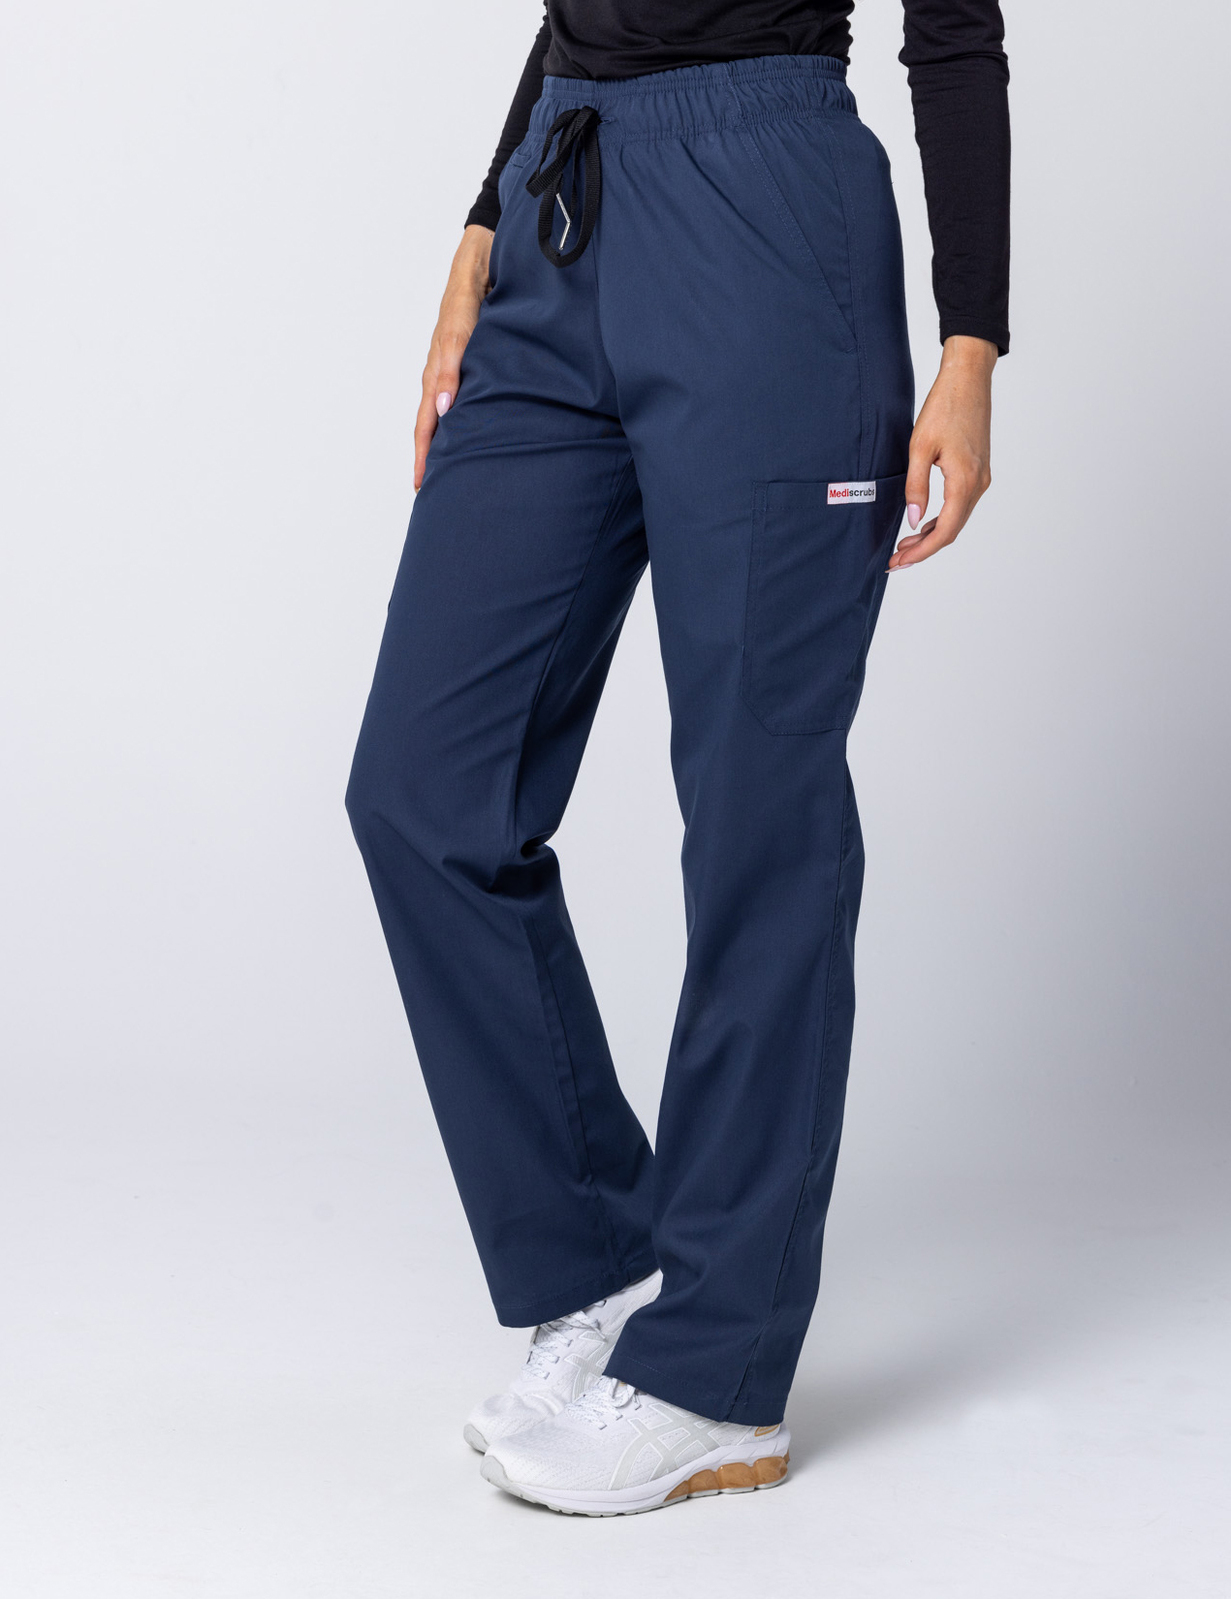 Women's Cargo Performance Pants - Navy - Small